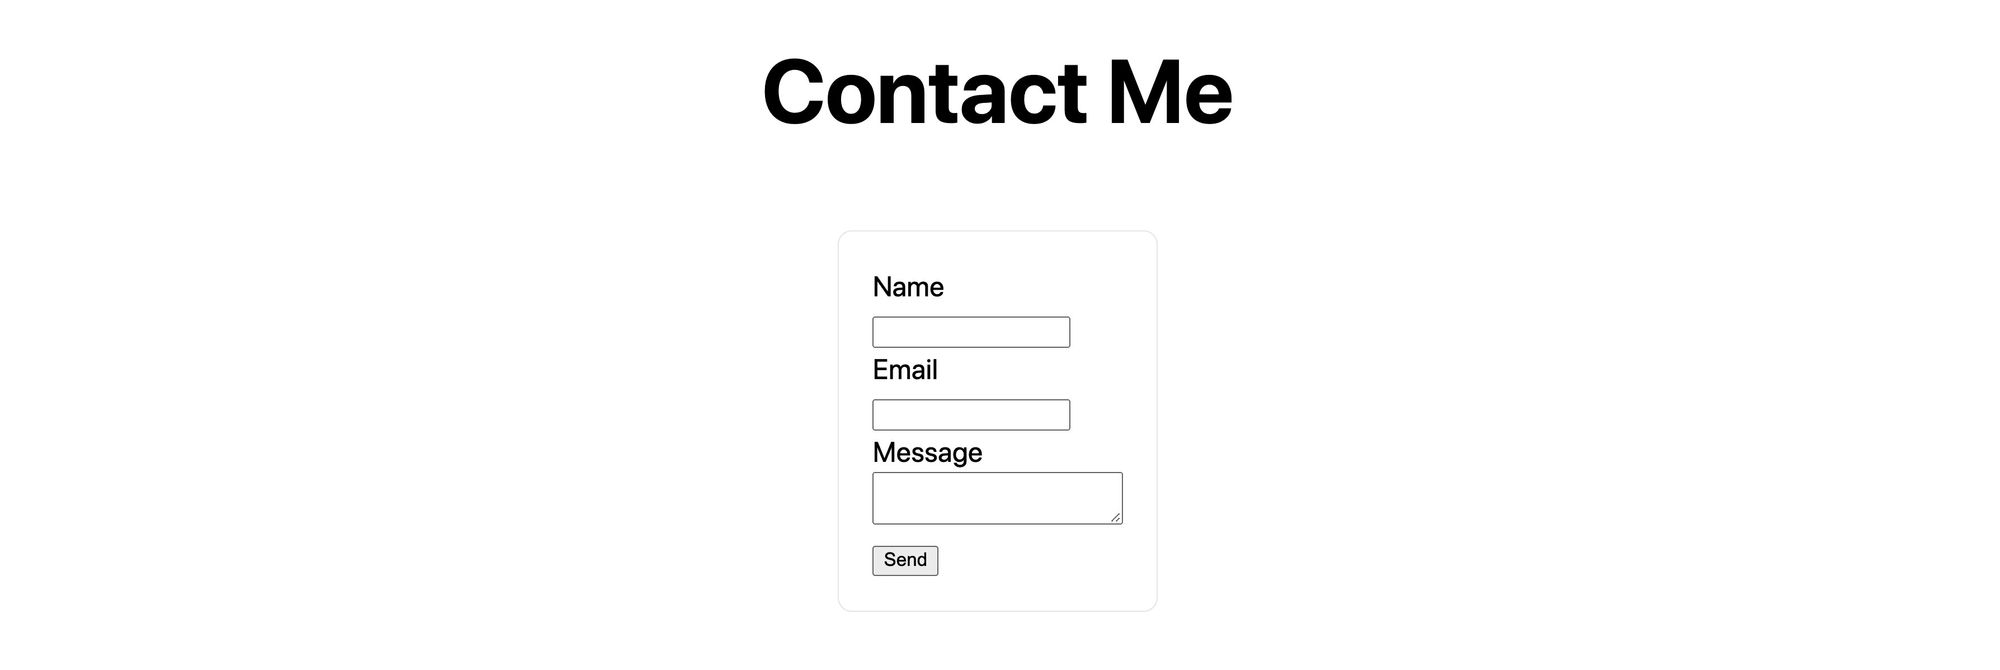 nextjs-contact-form-title